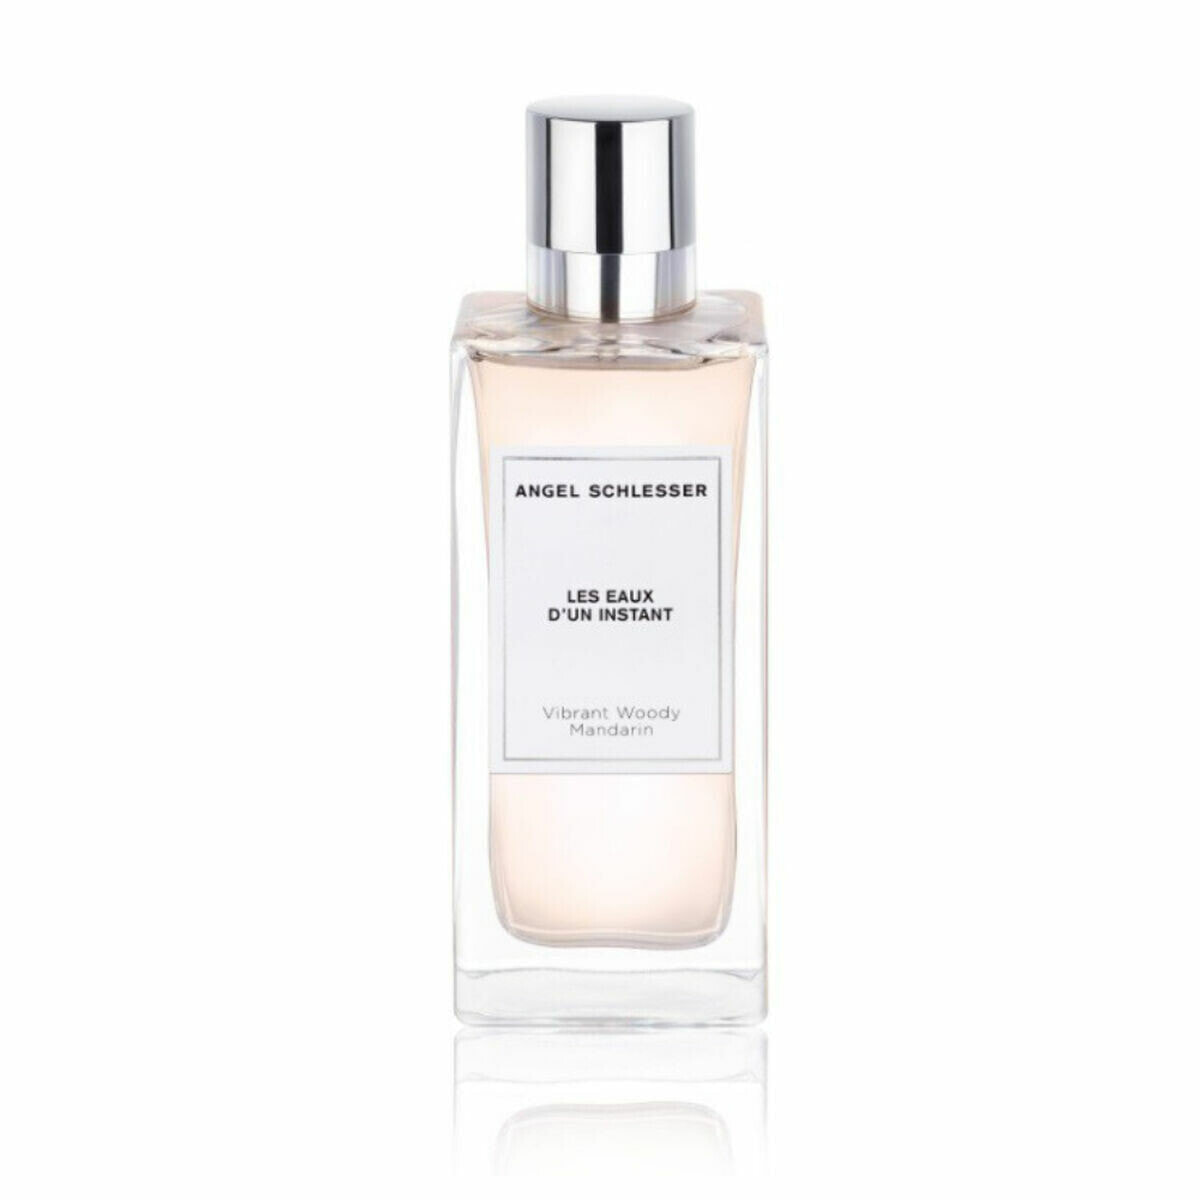 Men's Perfume Angel Schlesser VIBRANT WOODY MANDARIN EDT 150 ml Les eaux d'un instant Vibrant Woody Mandarin